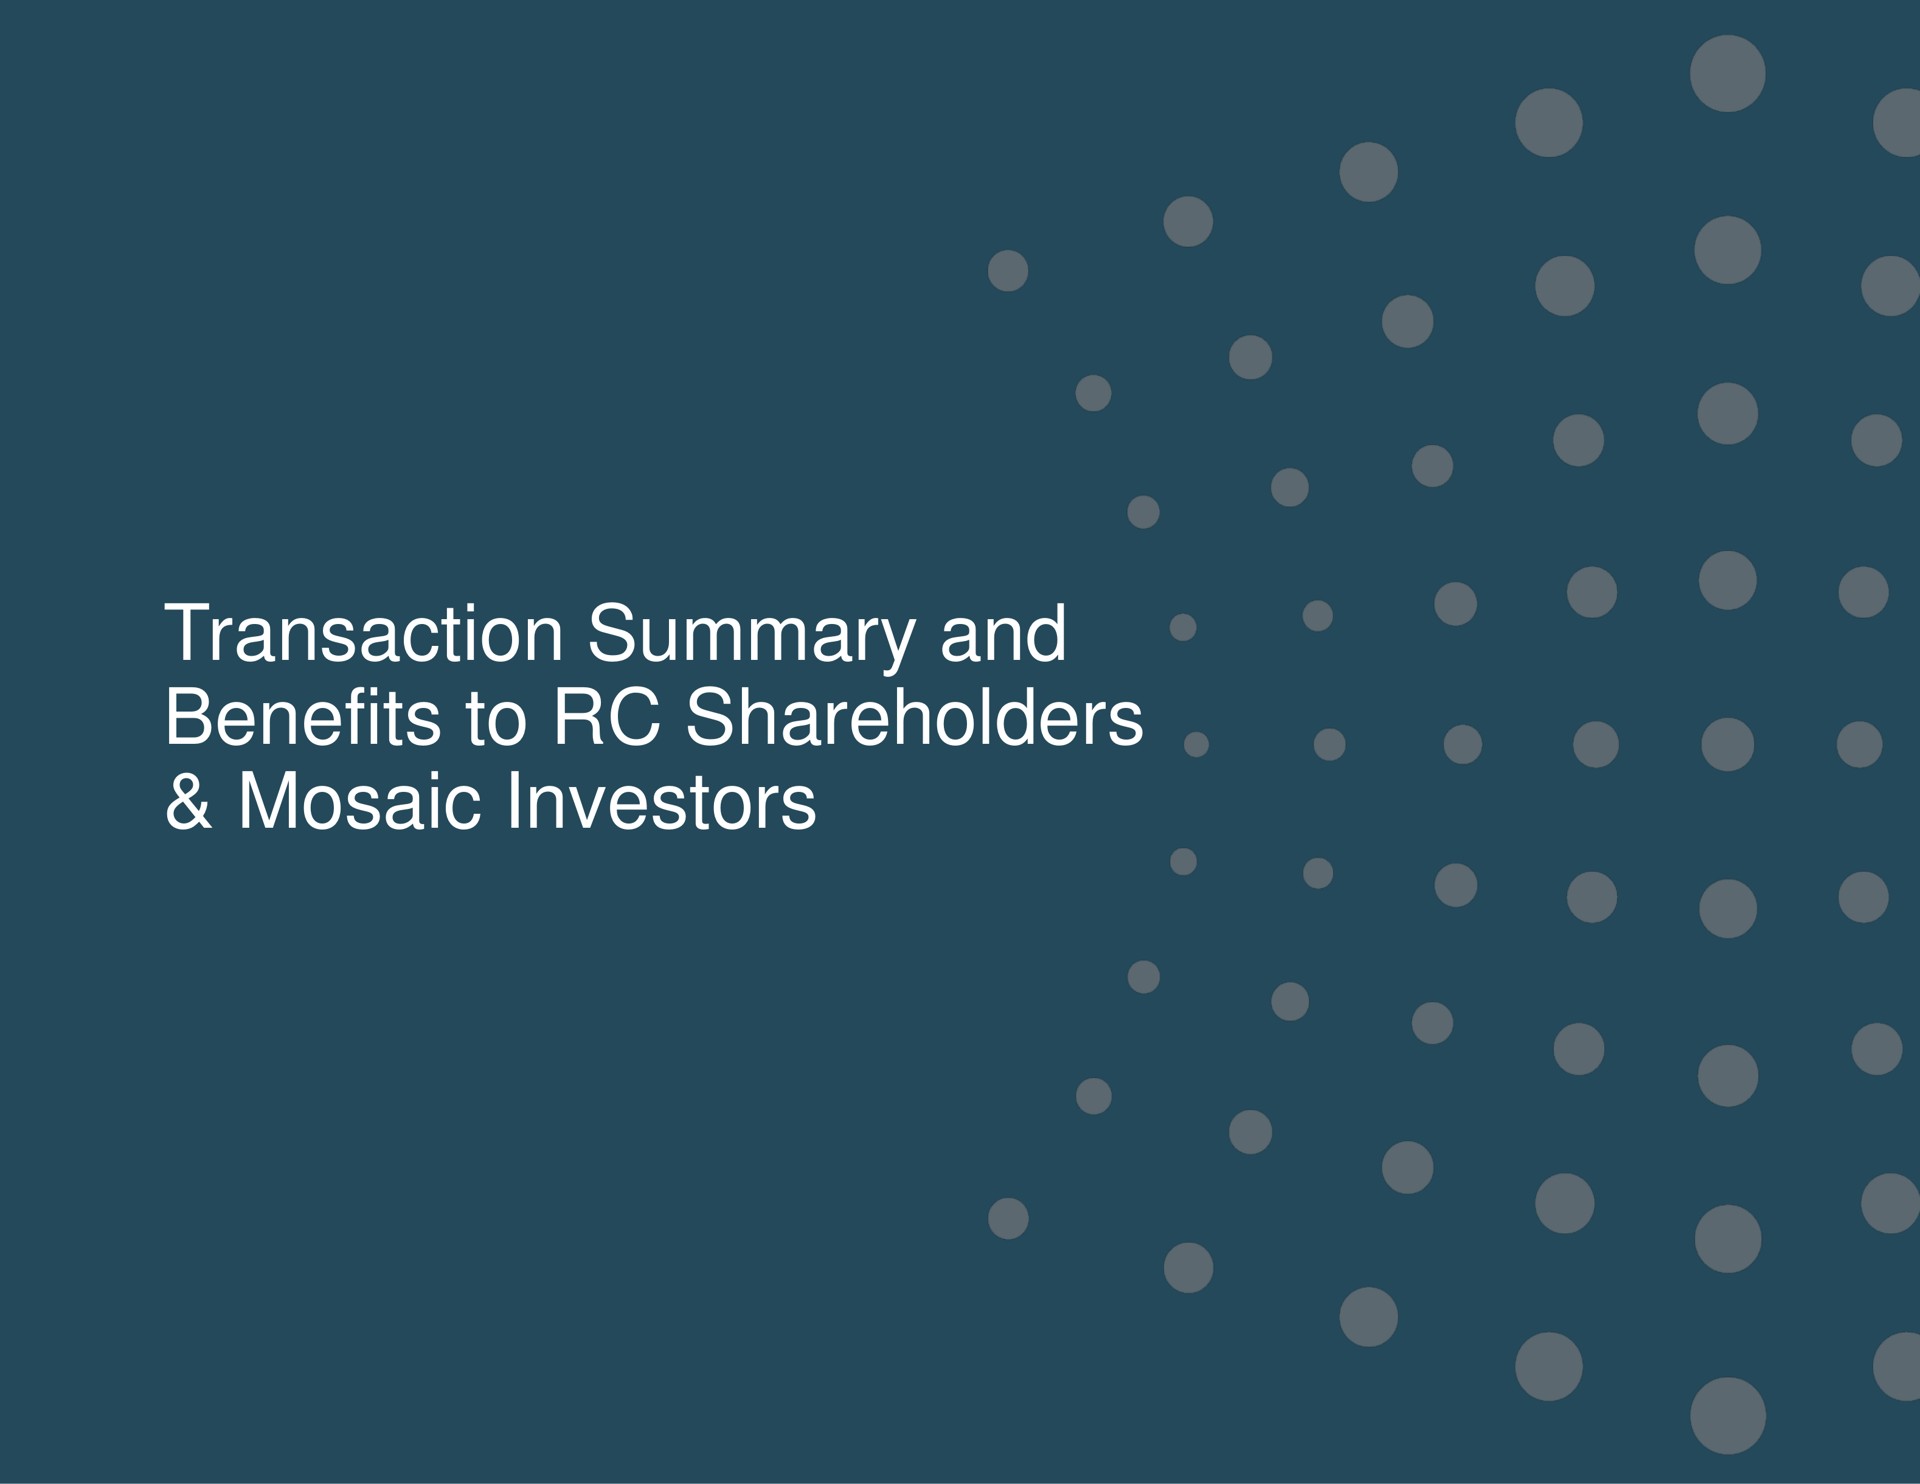 transaction summary and benefits to shareholders mosaic investors | Ready Capital